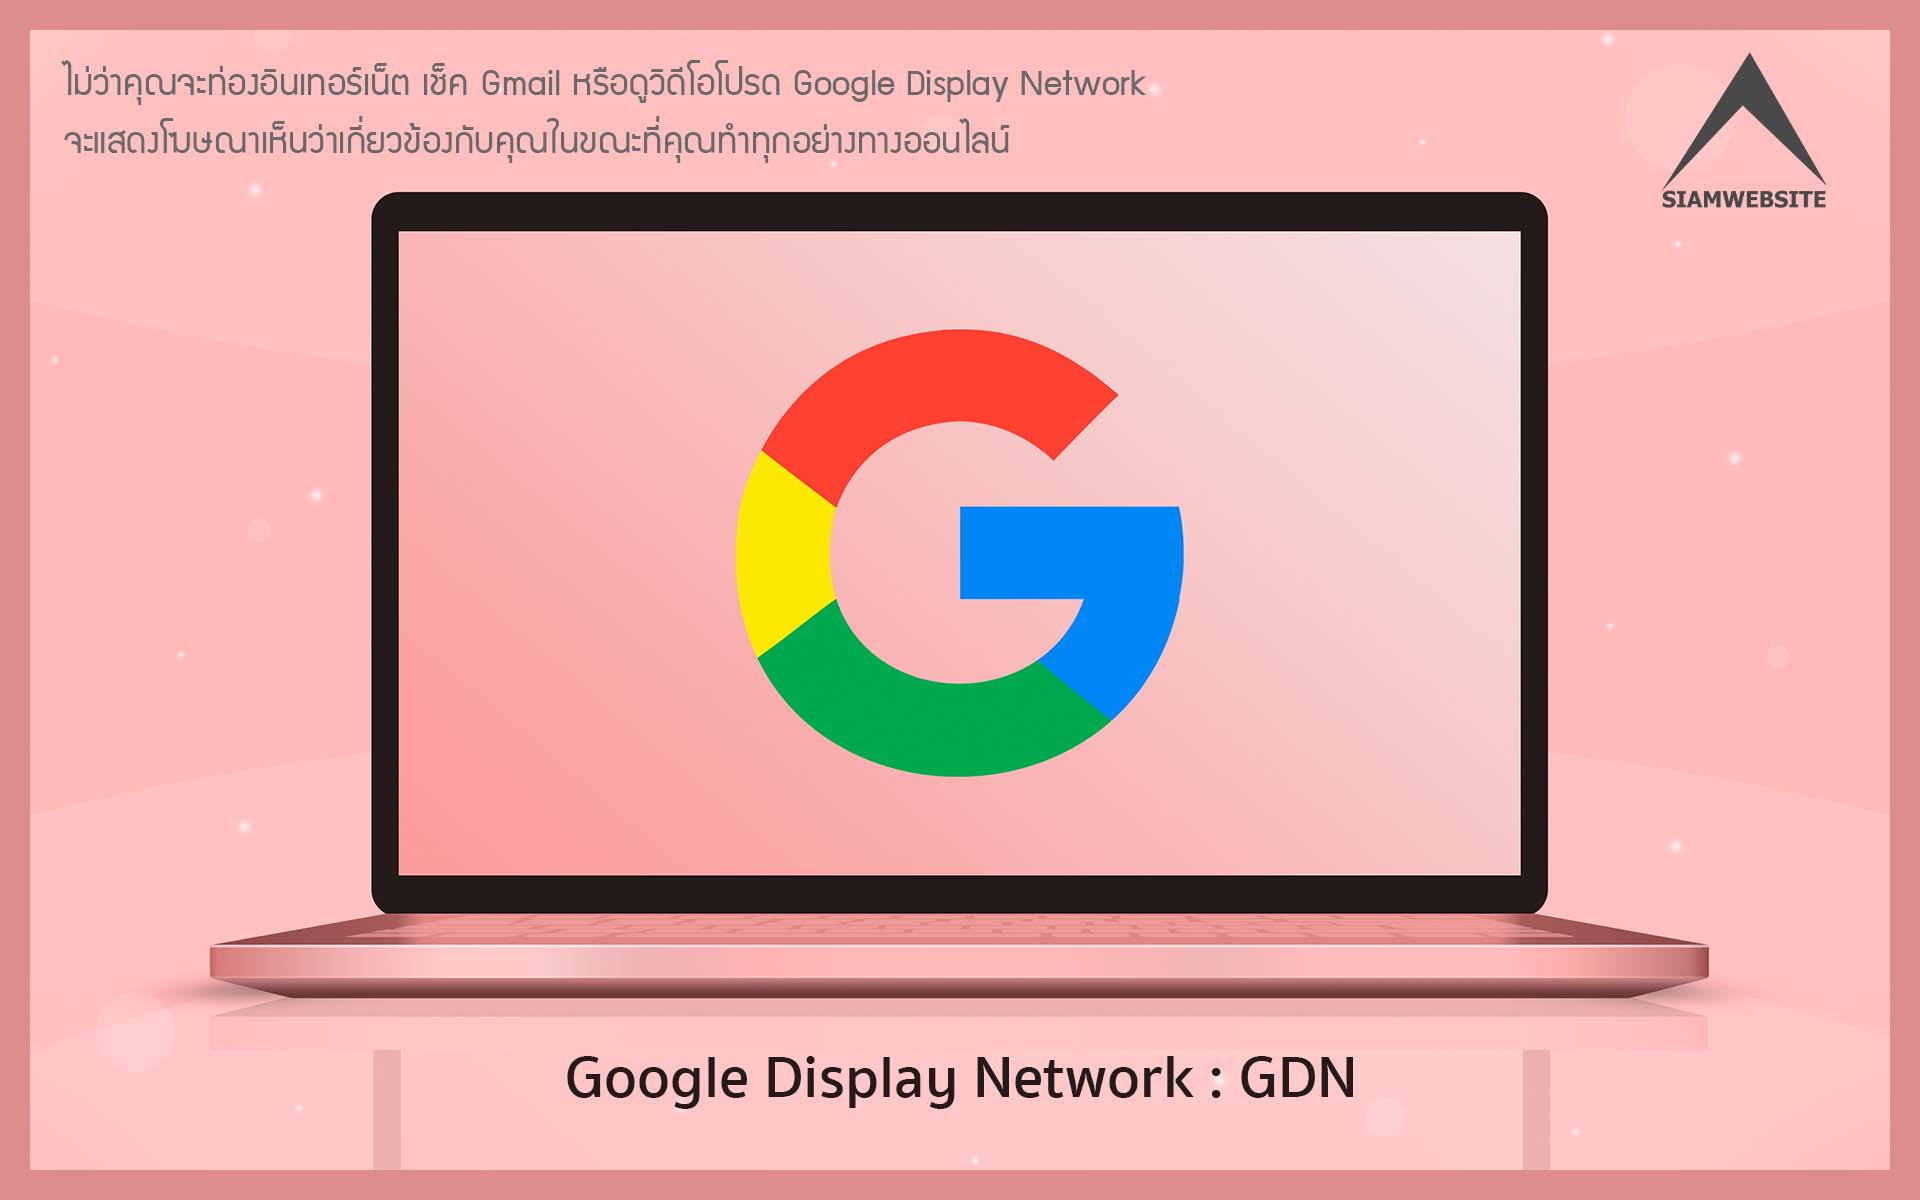 GDN ย่อมาจาก Google Display Network เครื่องมือโฆษณาของ Google | TTT-WEBSITE รับทําเว็บไซต์ เว็บขยายสายงาน